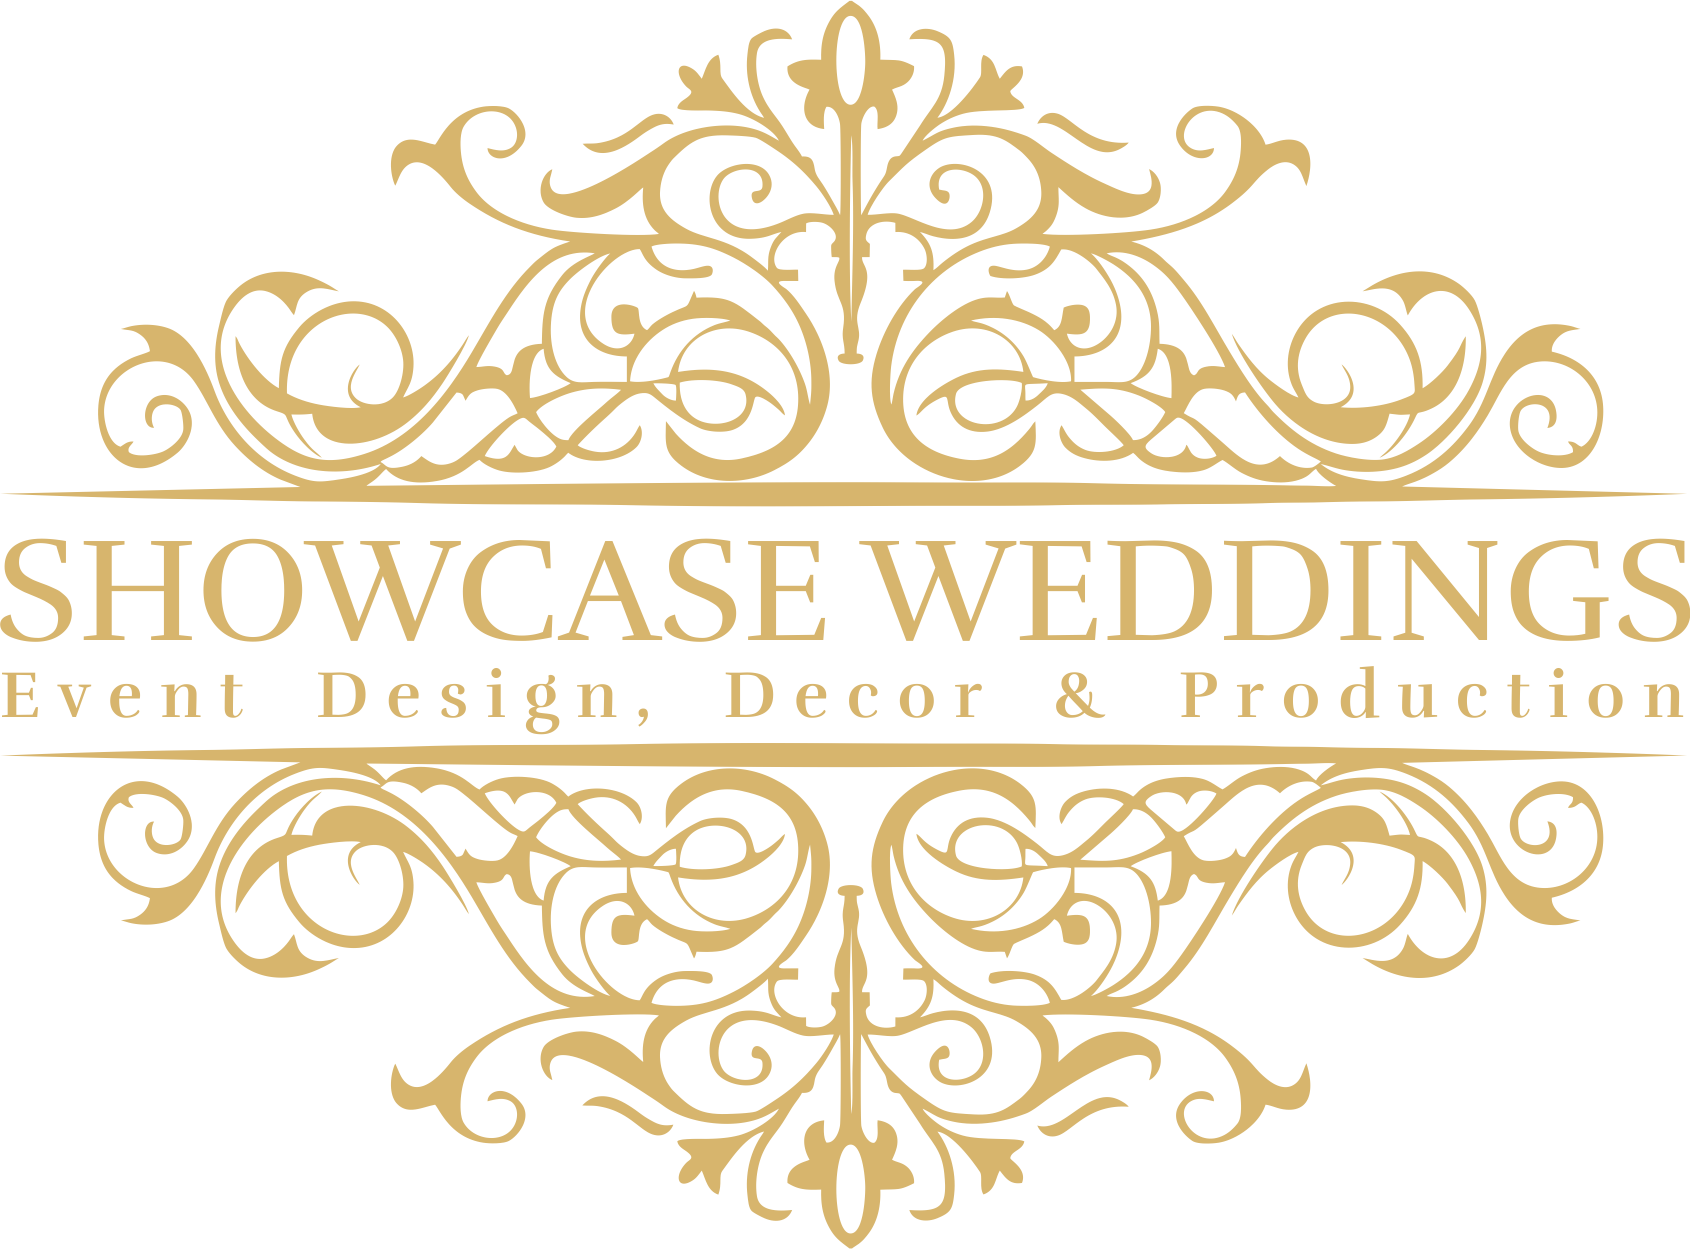 wedding invitation, logo, symbol PNG images for editing